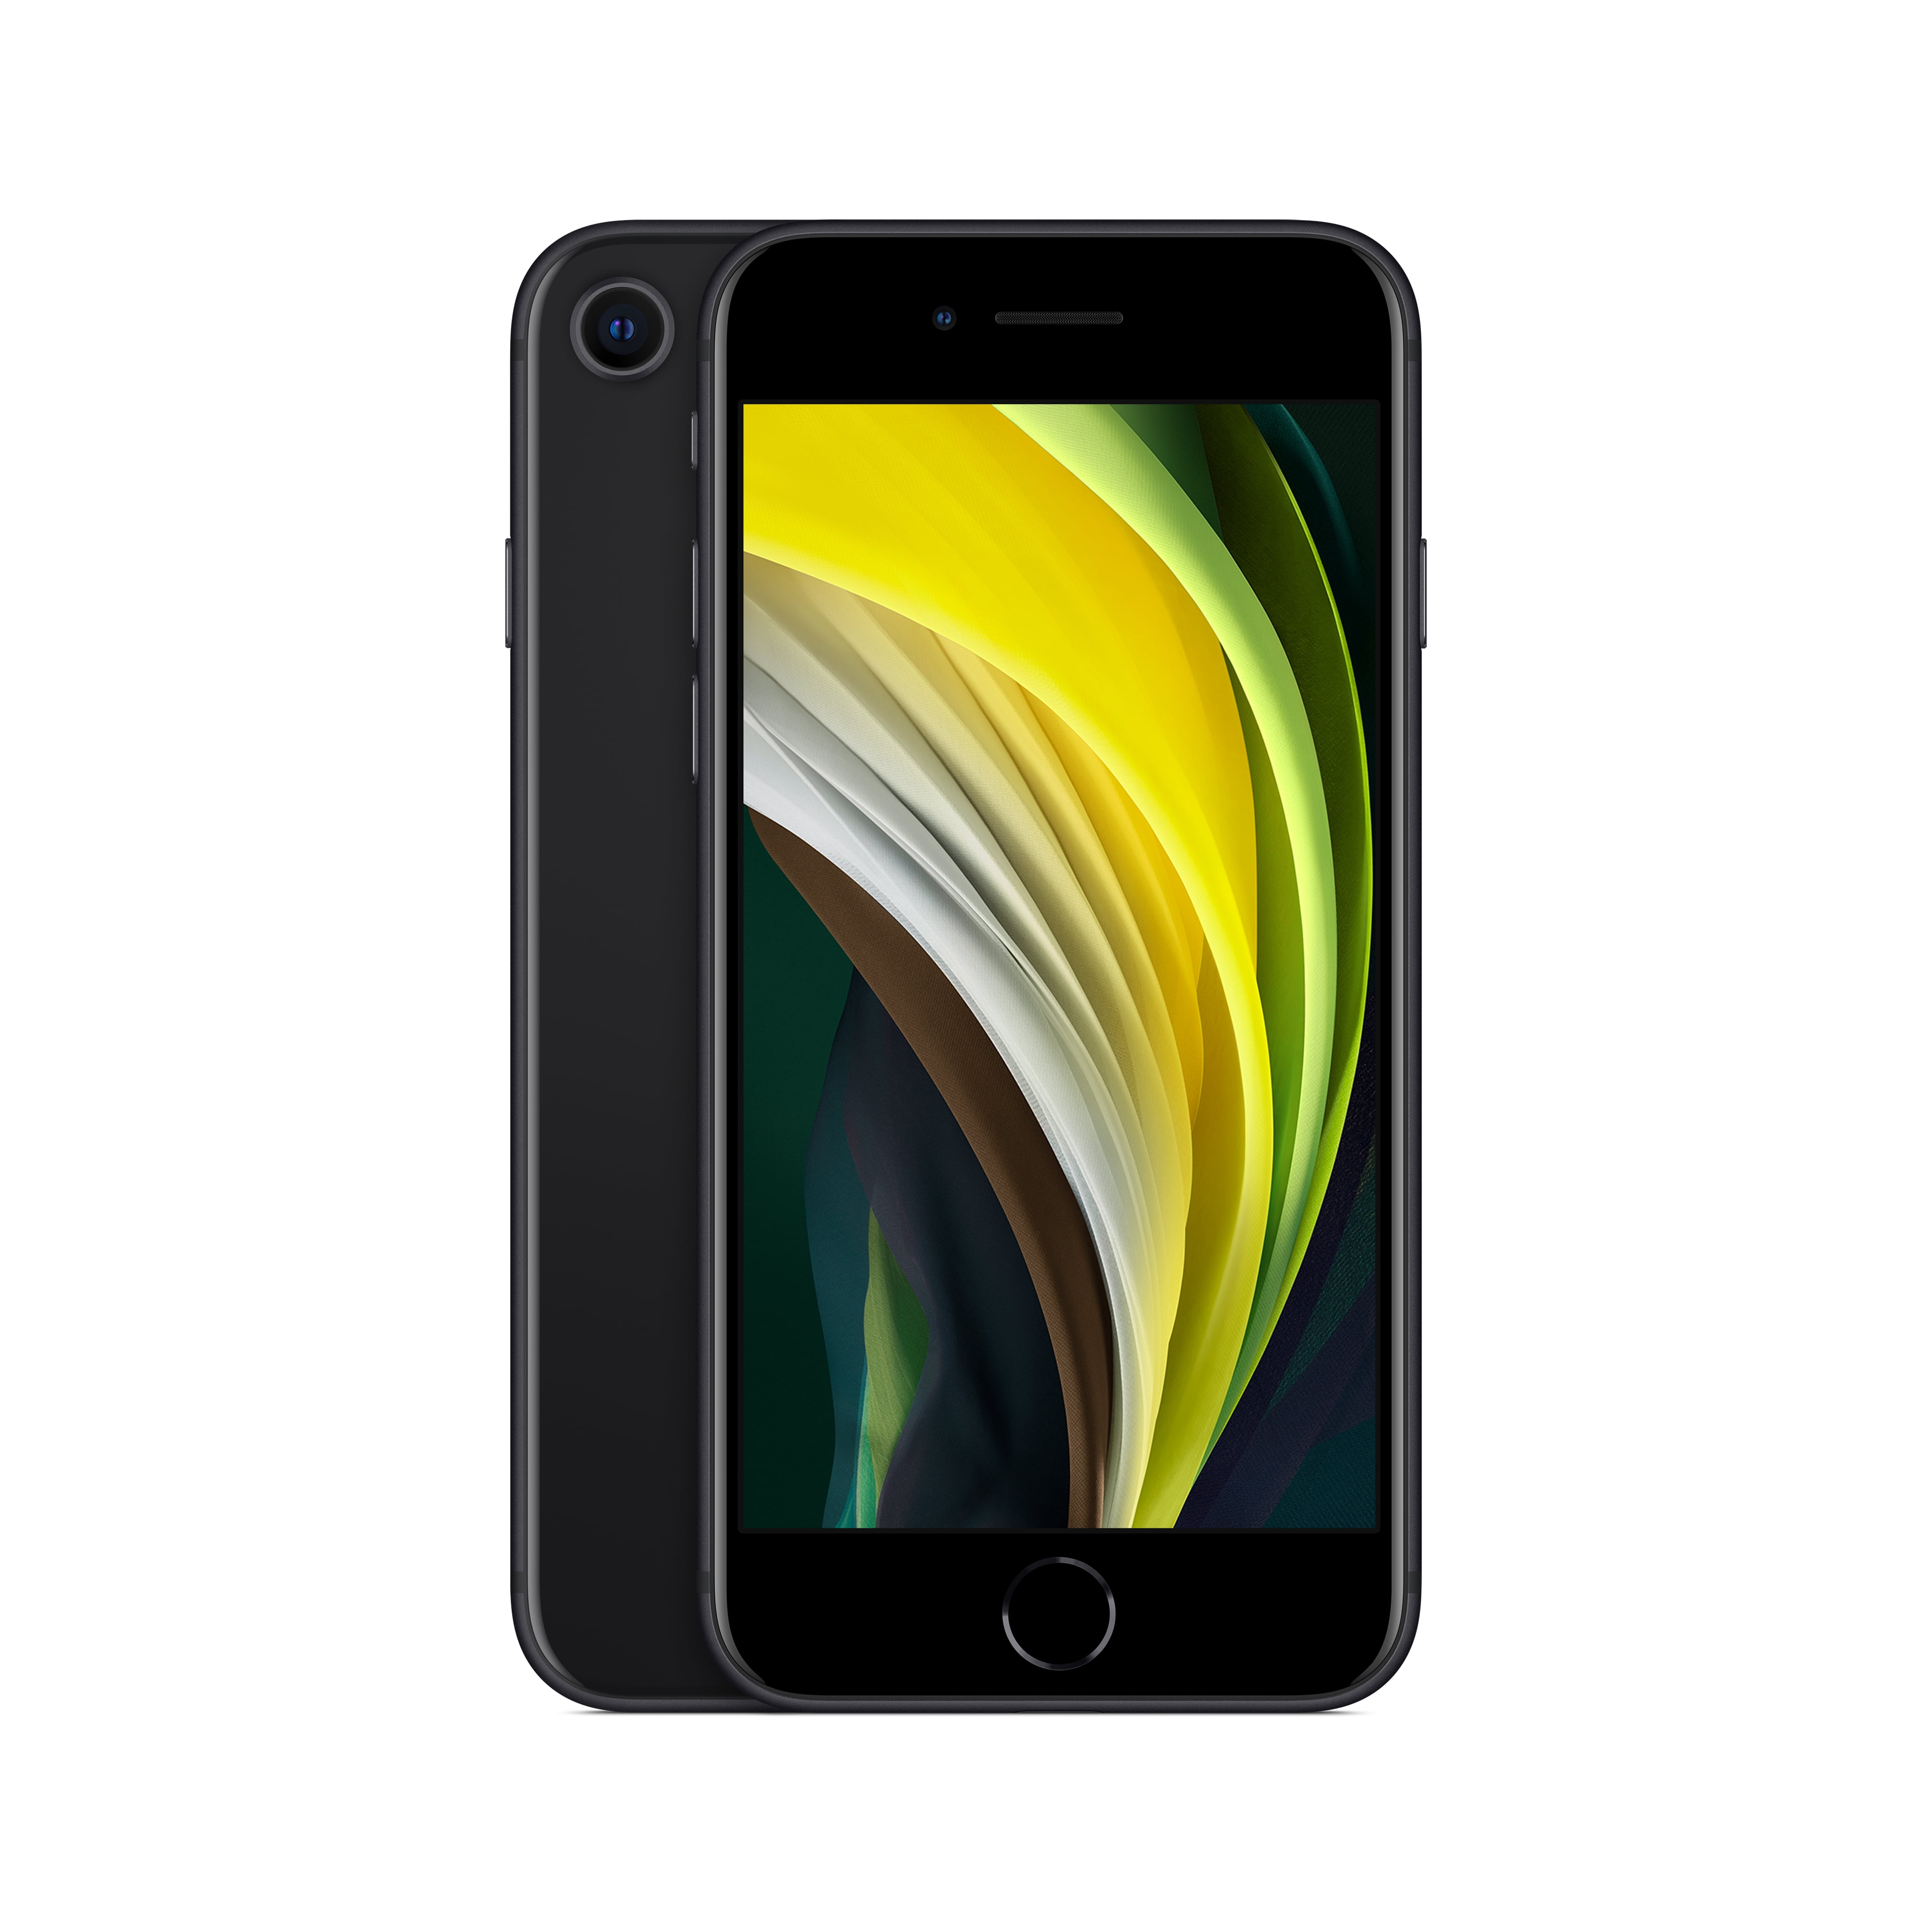 Walmart Family Mobile Apple iPhone SE (2020), 64GB, Black- Prepaid Smartphone [Locked to Walmart Family Mobile]